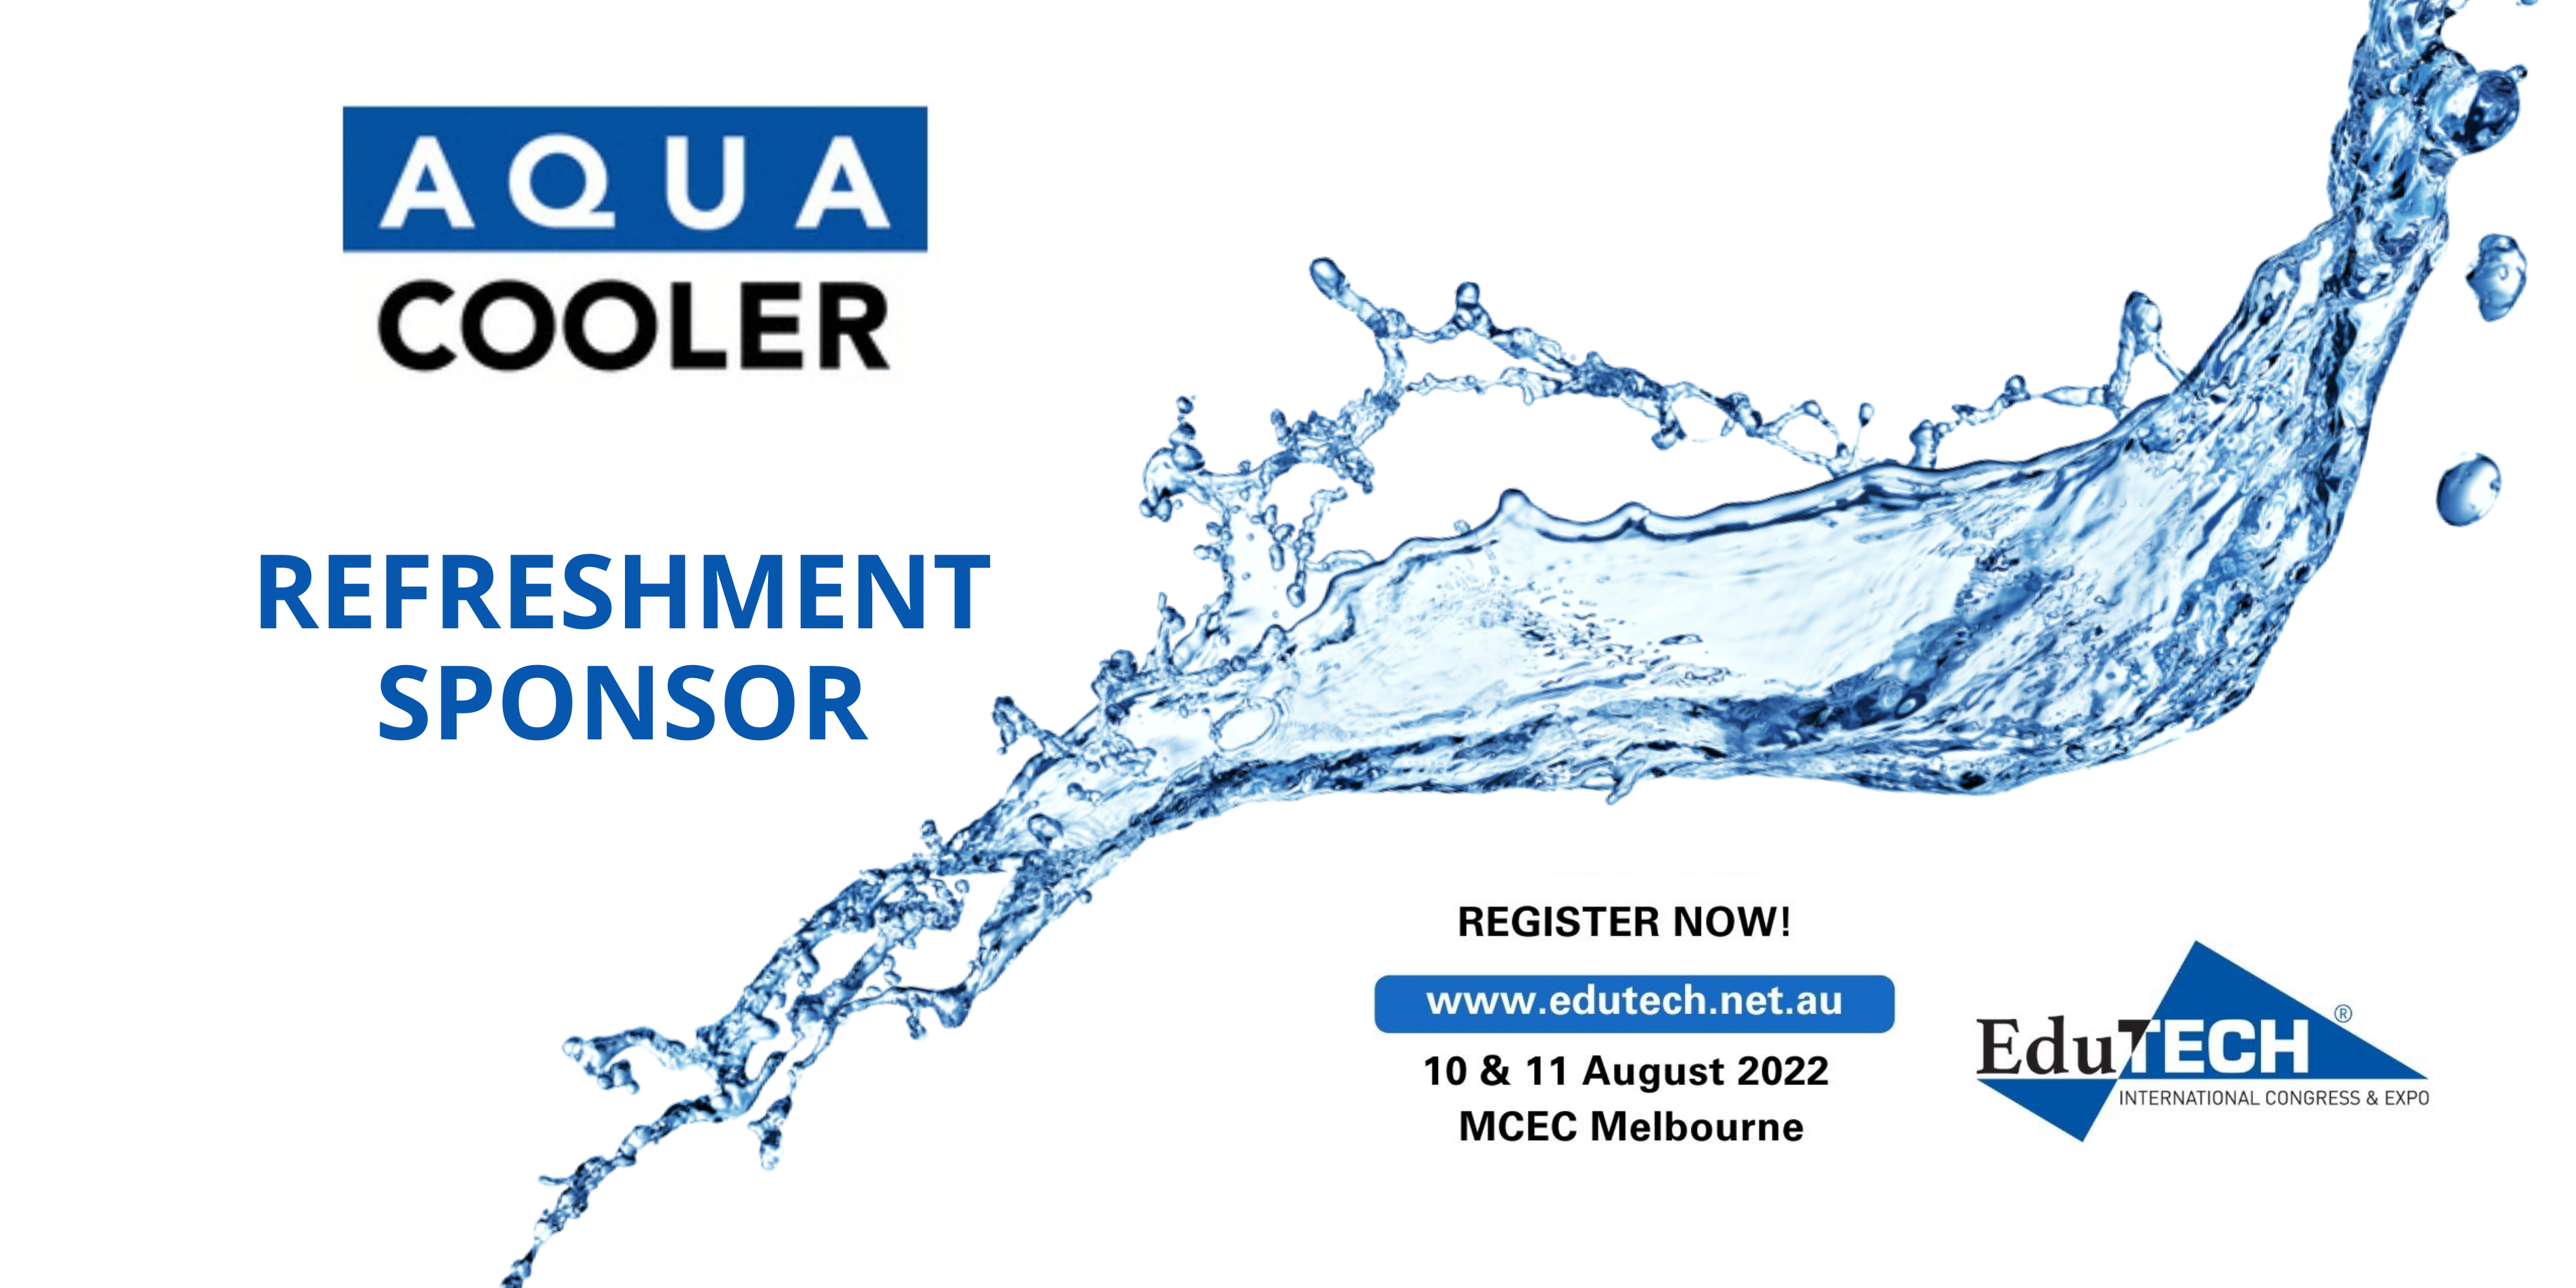 Aqua Cooler is coming to EduTECH 2022!